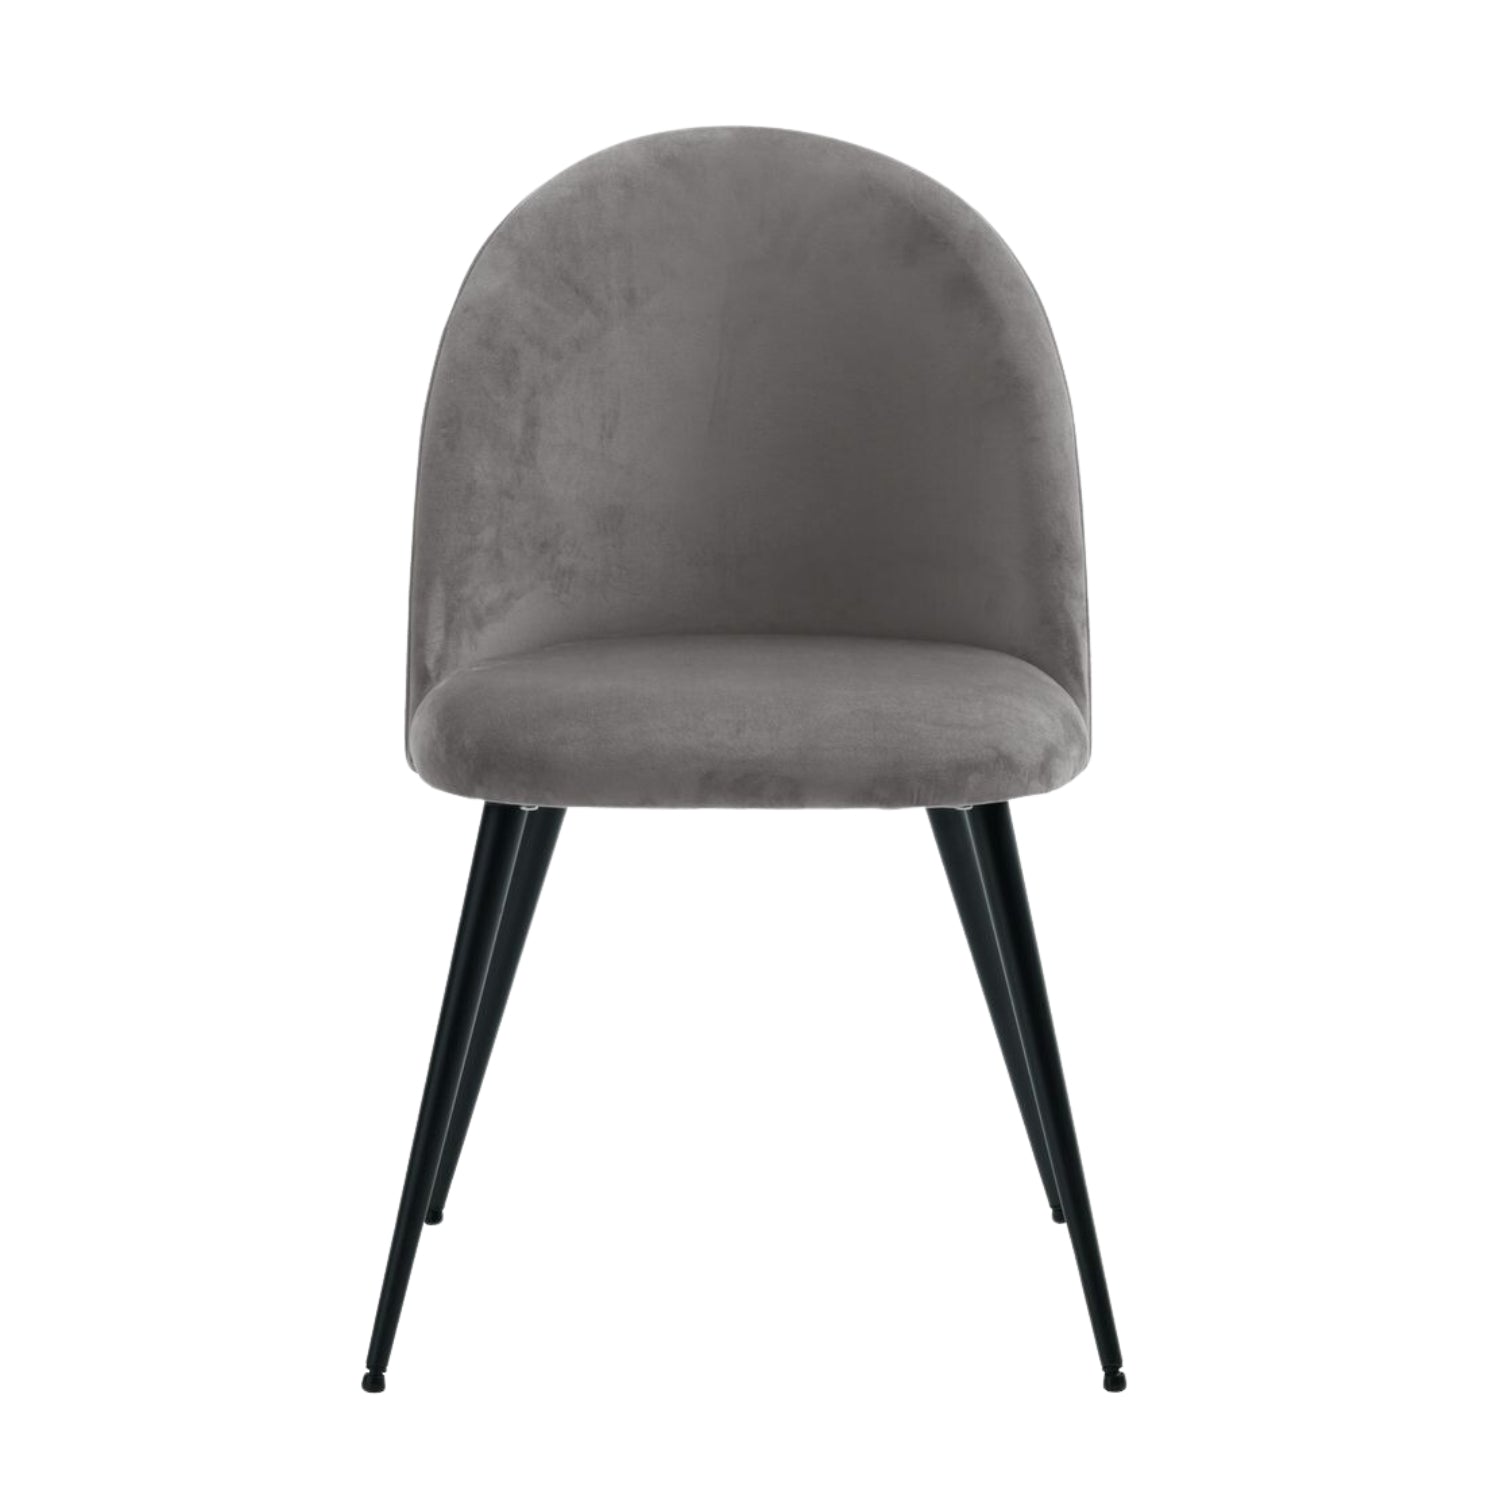 Willa arlo stylish grey velvet chair featuring black legs.